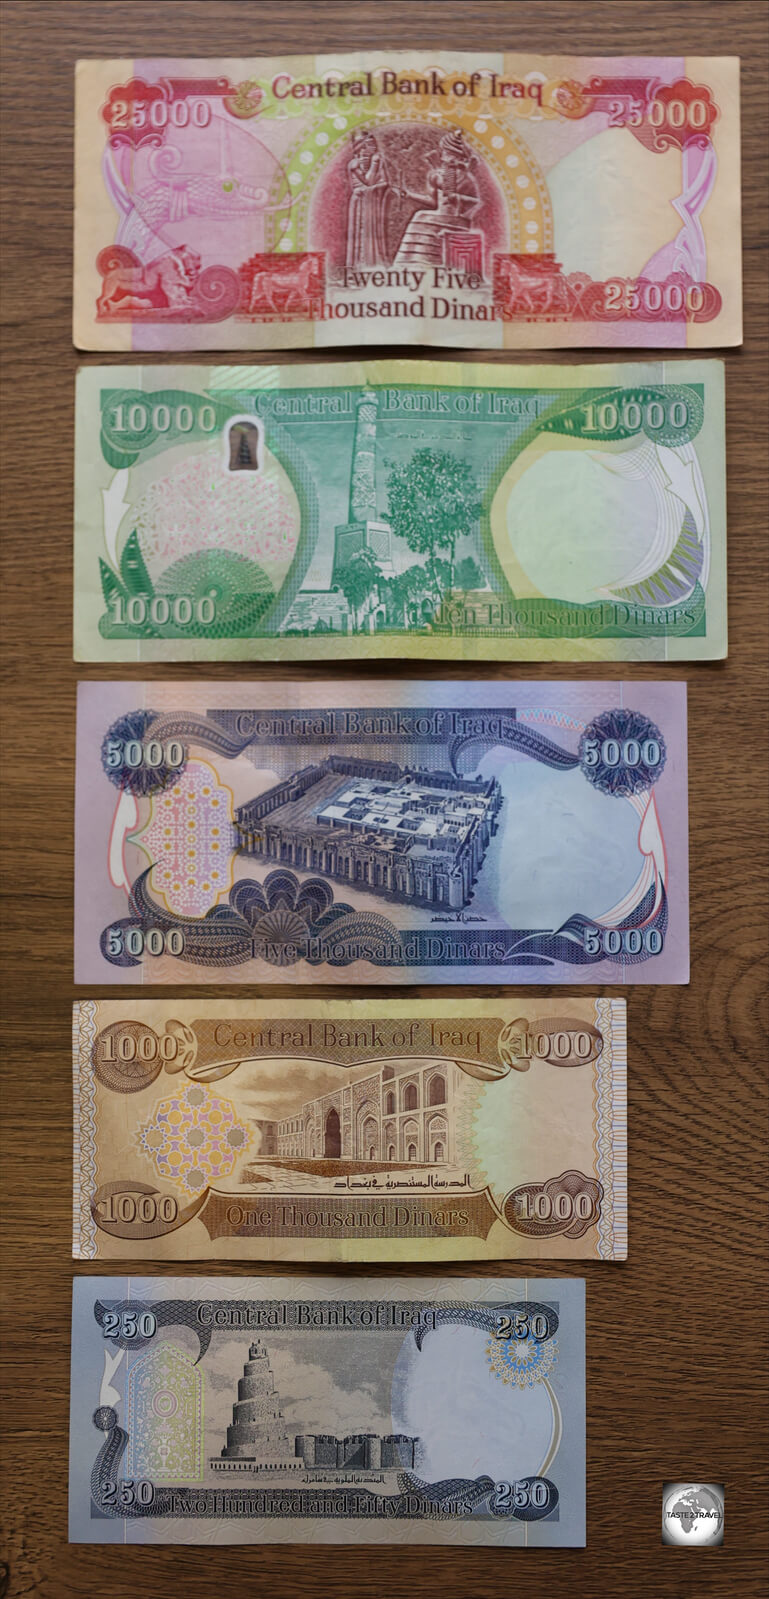 Iraqi dinar bank notes.